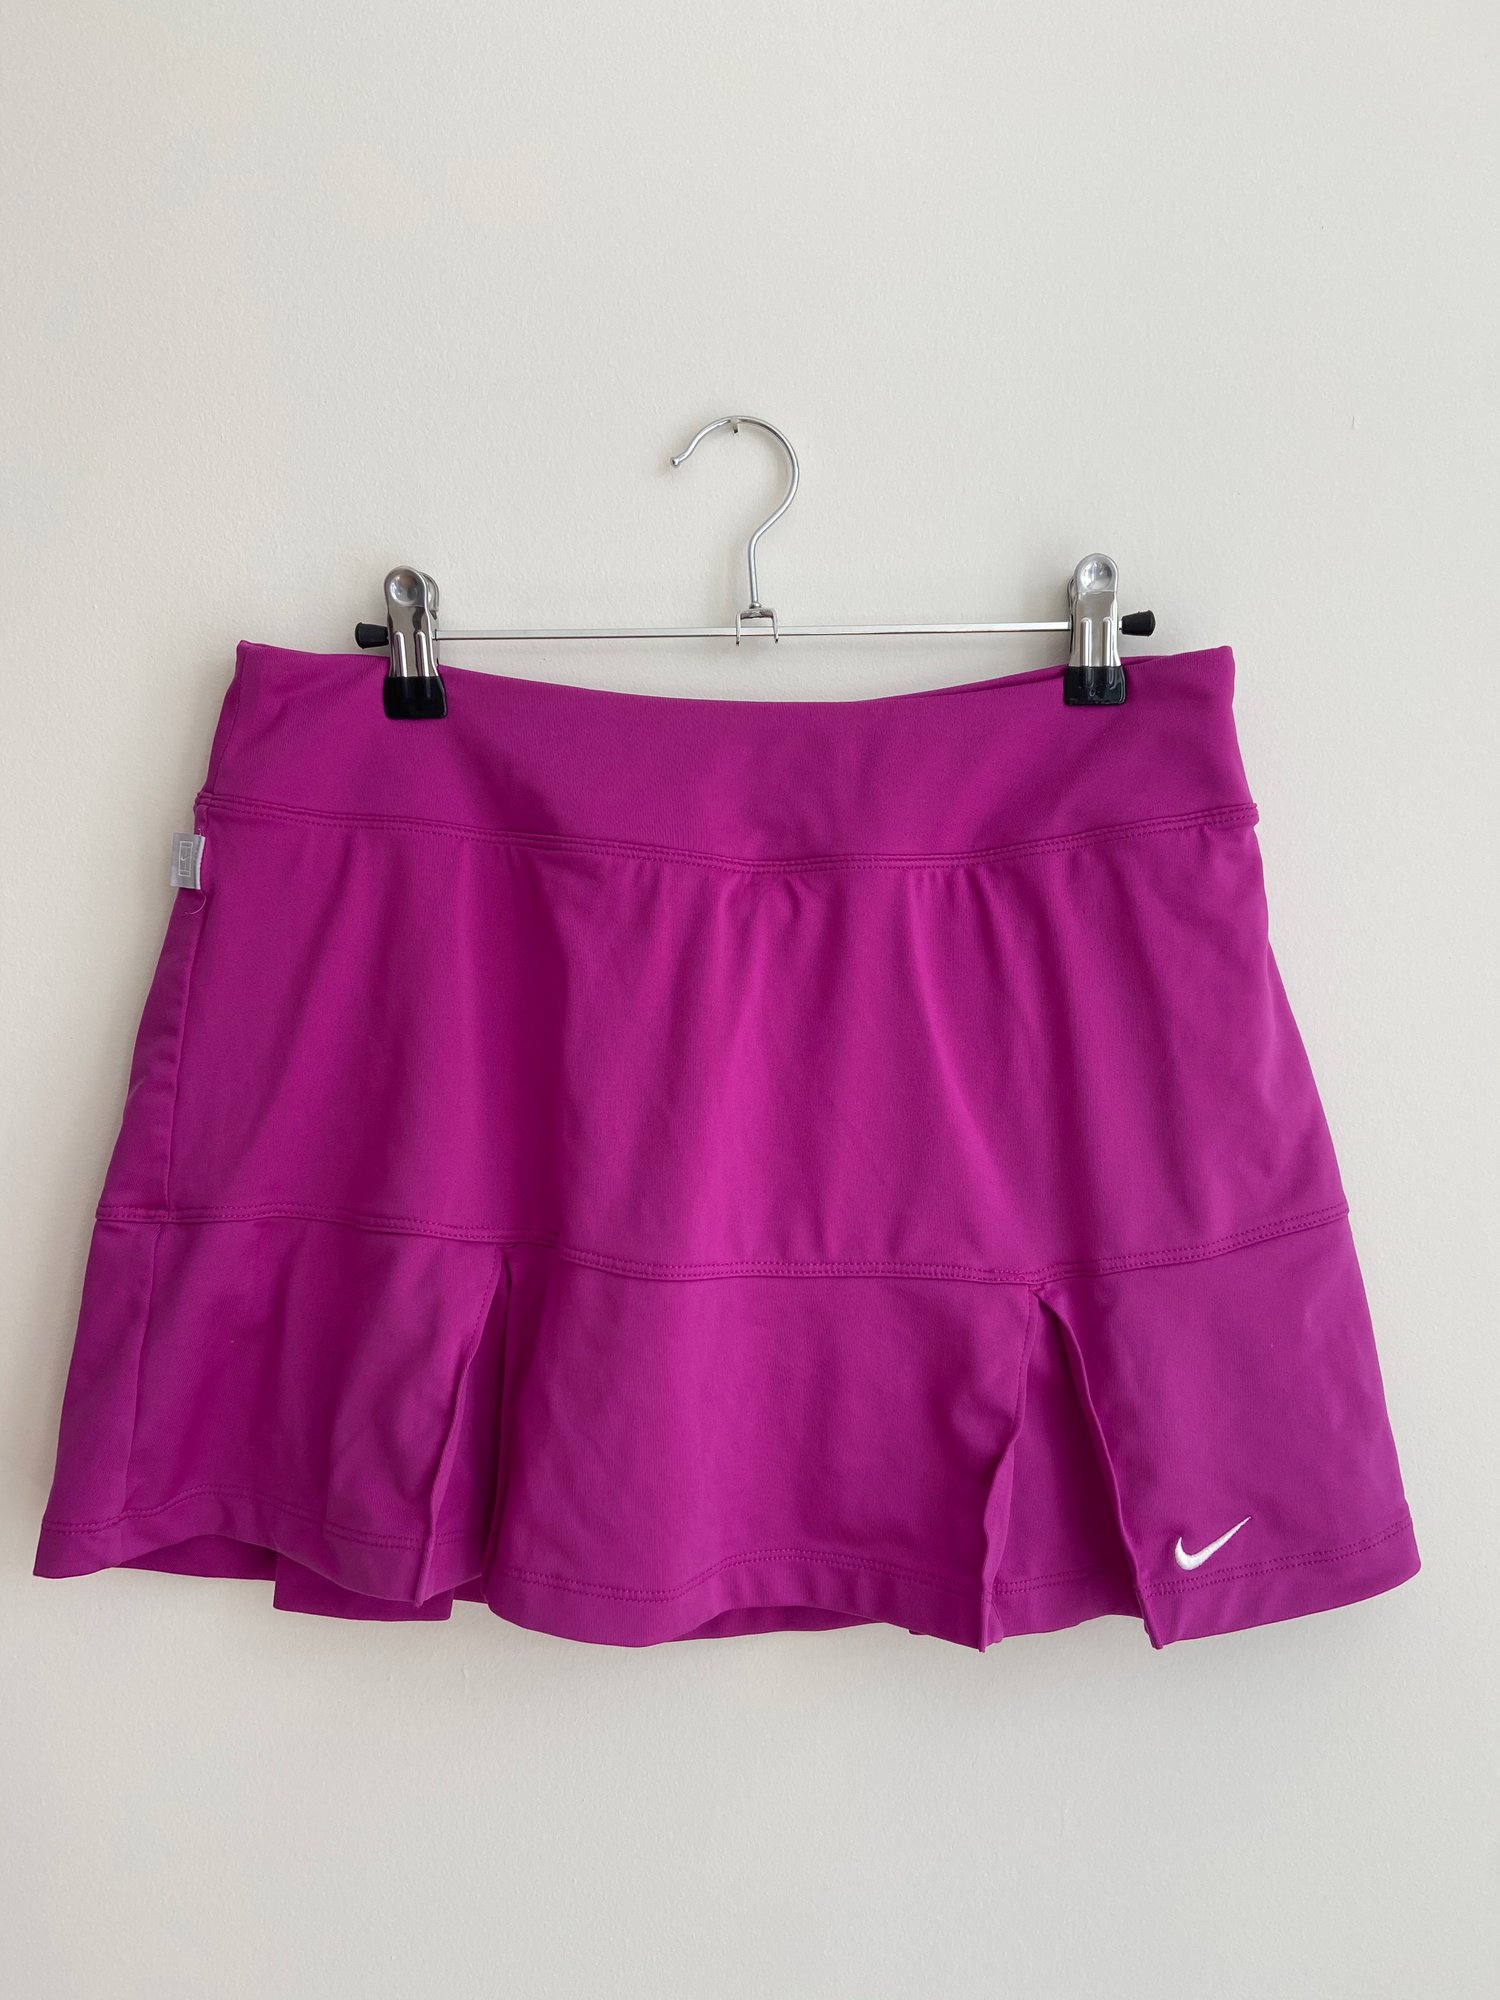 Fuchsia Nike tennis skirt 